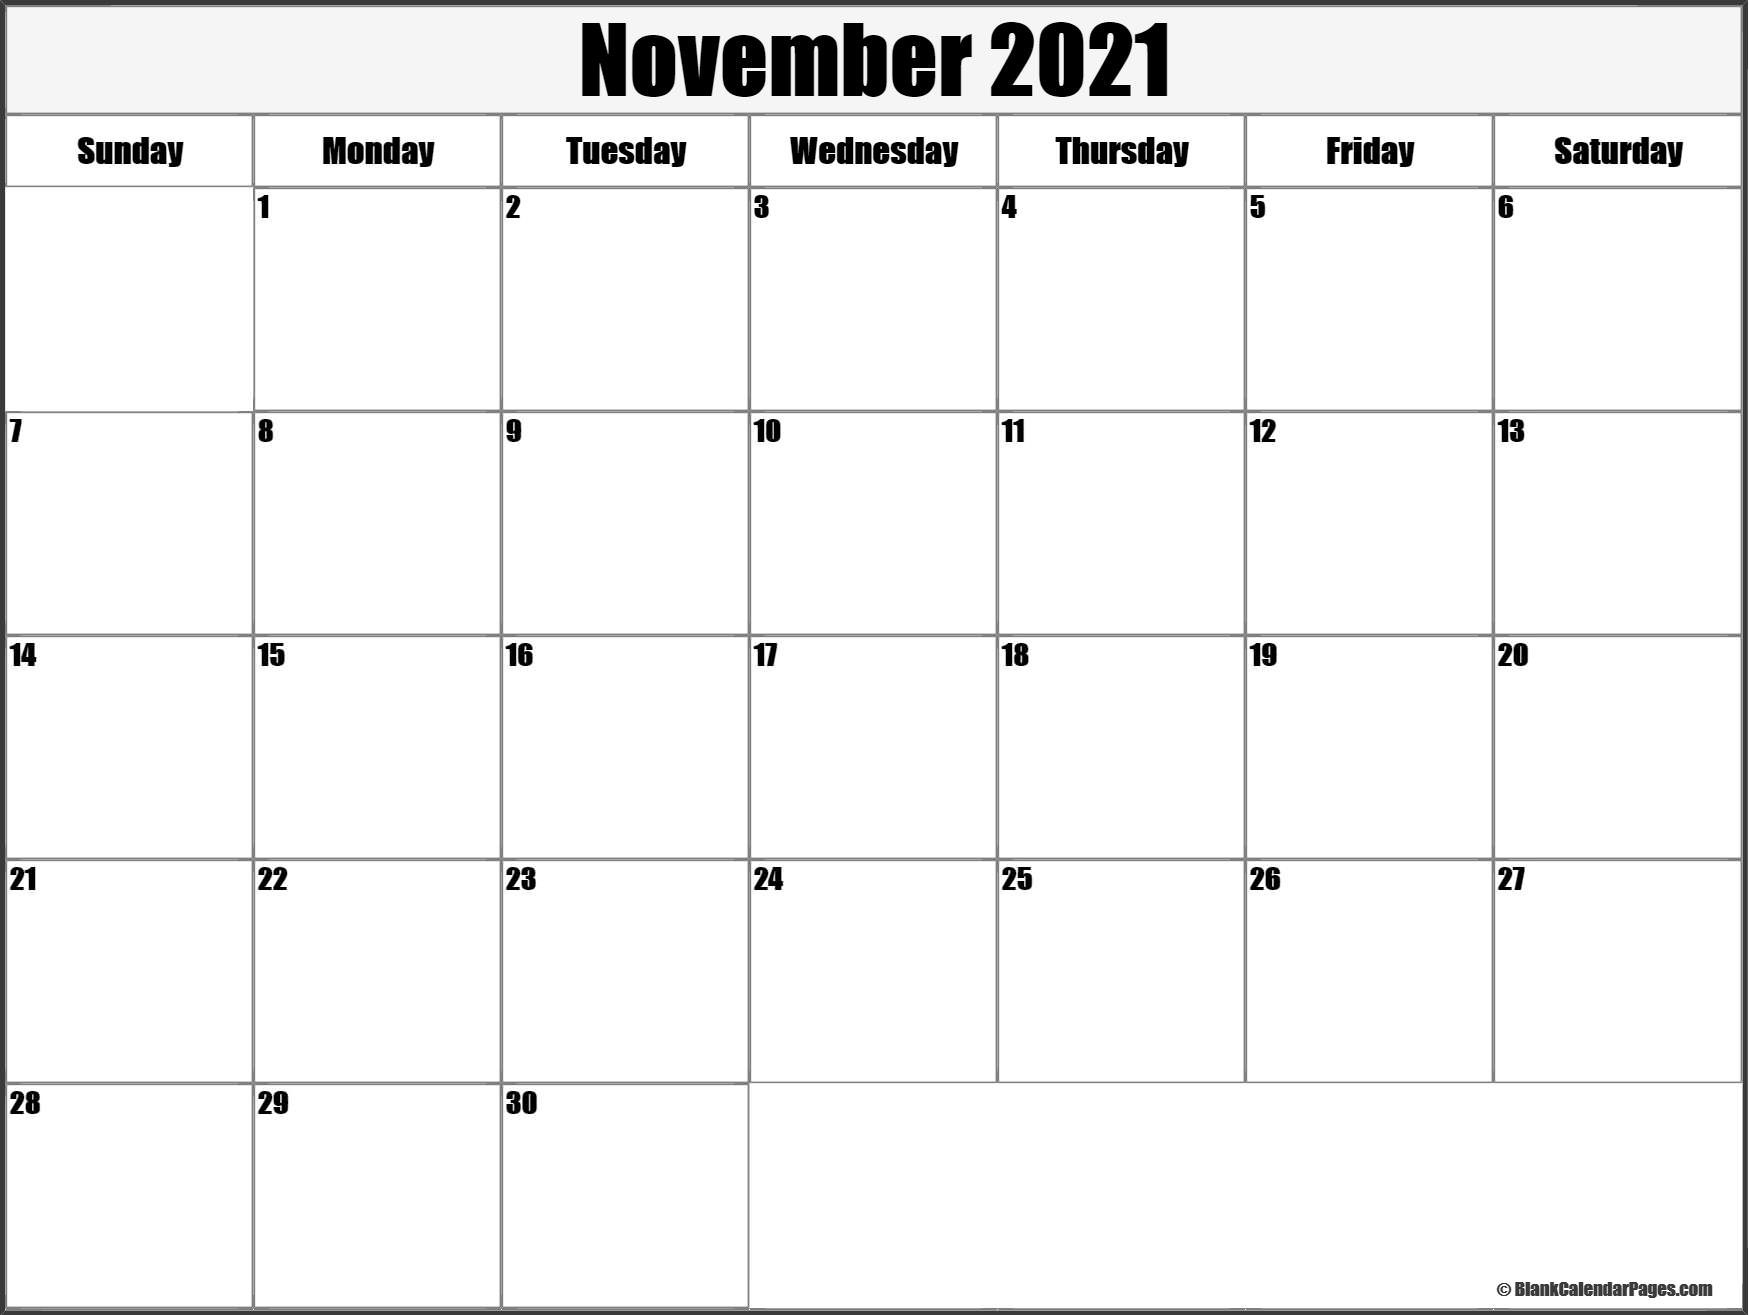 November 2021 Blank Calendar Templates.-November 2021 Fill In Calendar